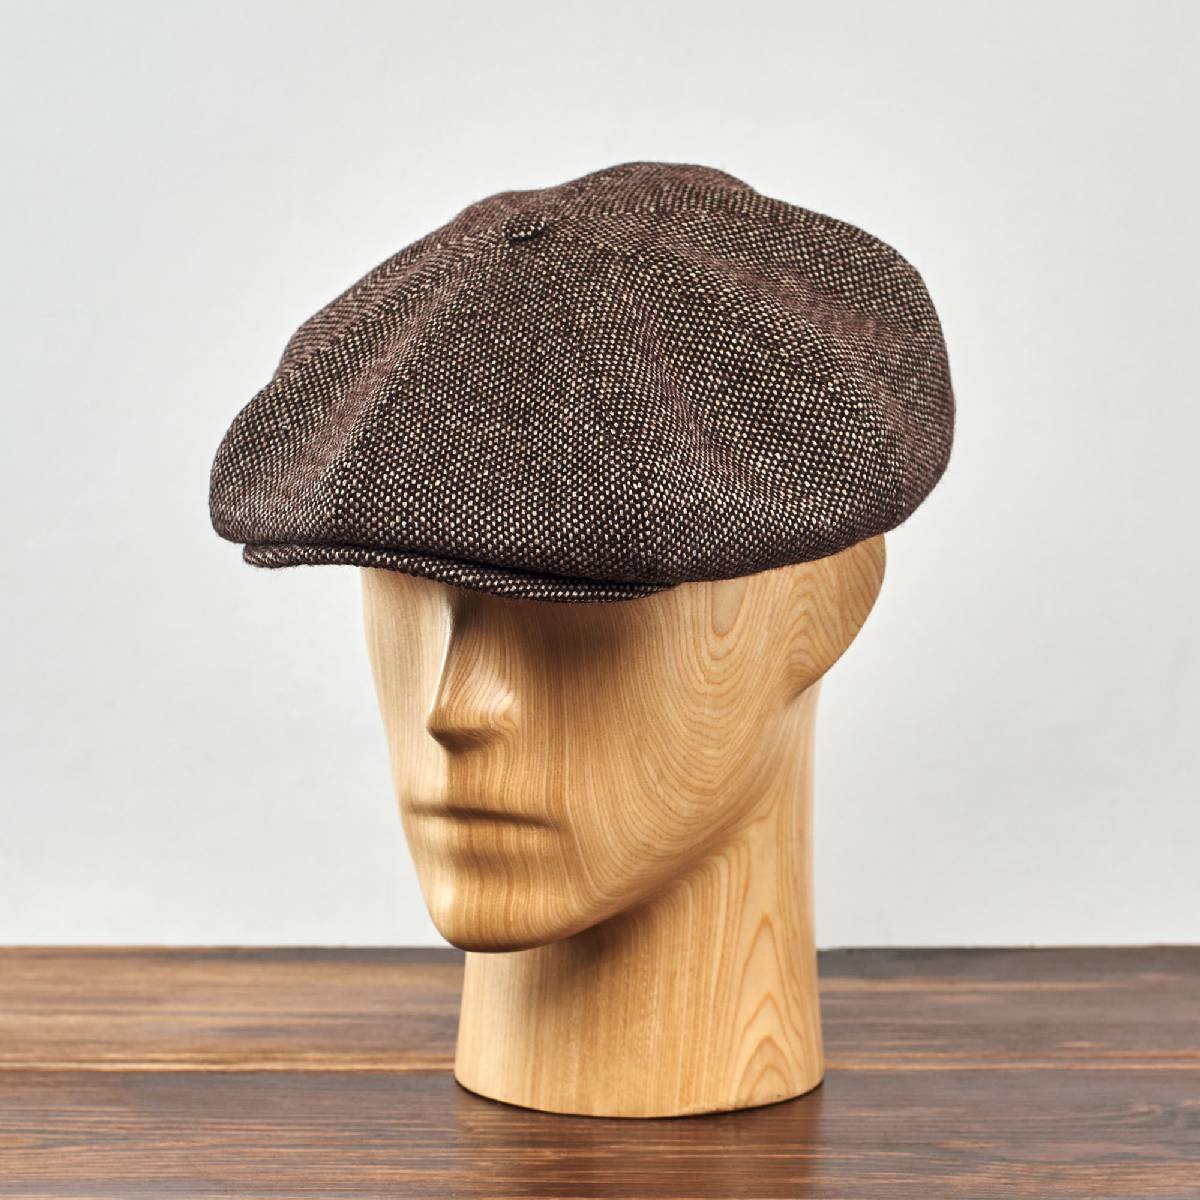 Failsworth Lewis Bakerboy/Cappello da Strillone/Peaky Blinder patchwork in tweed lana Cap 